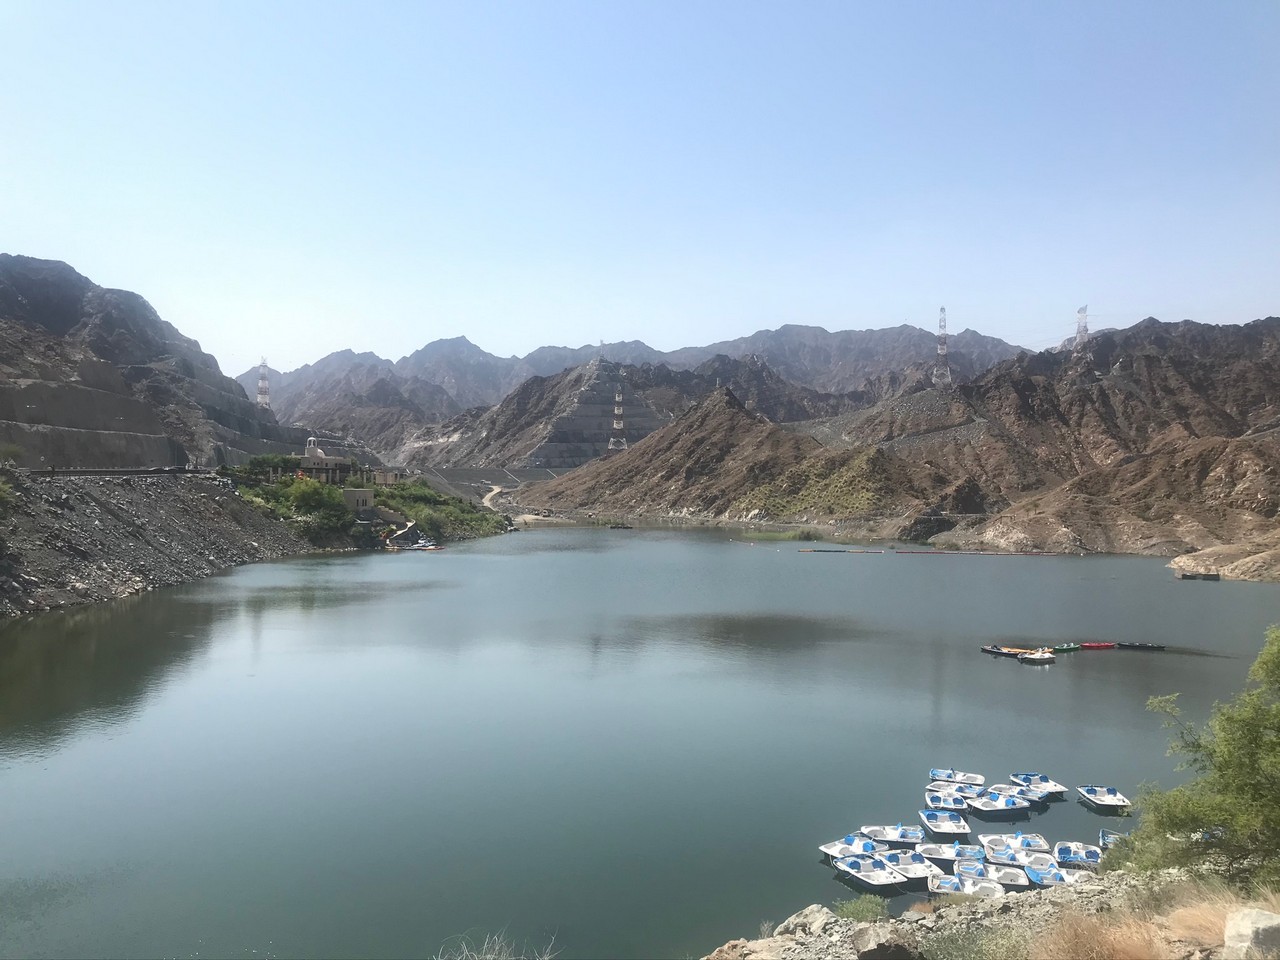 Rafisa Dam